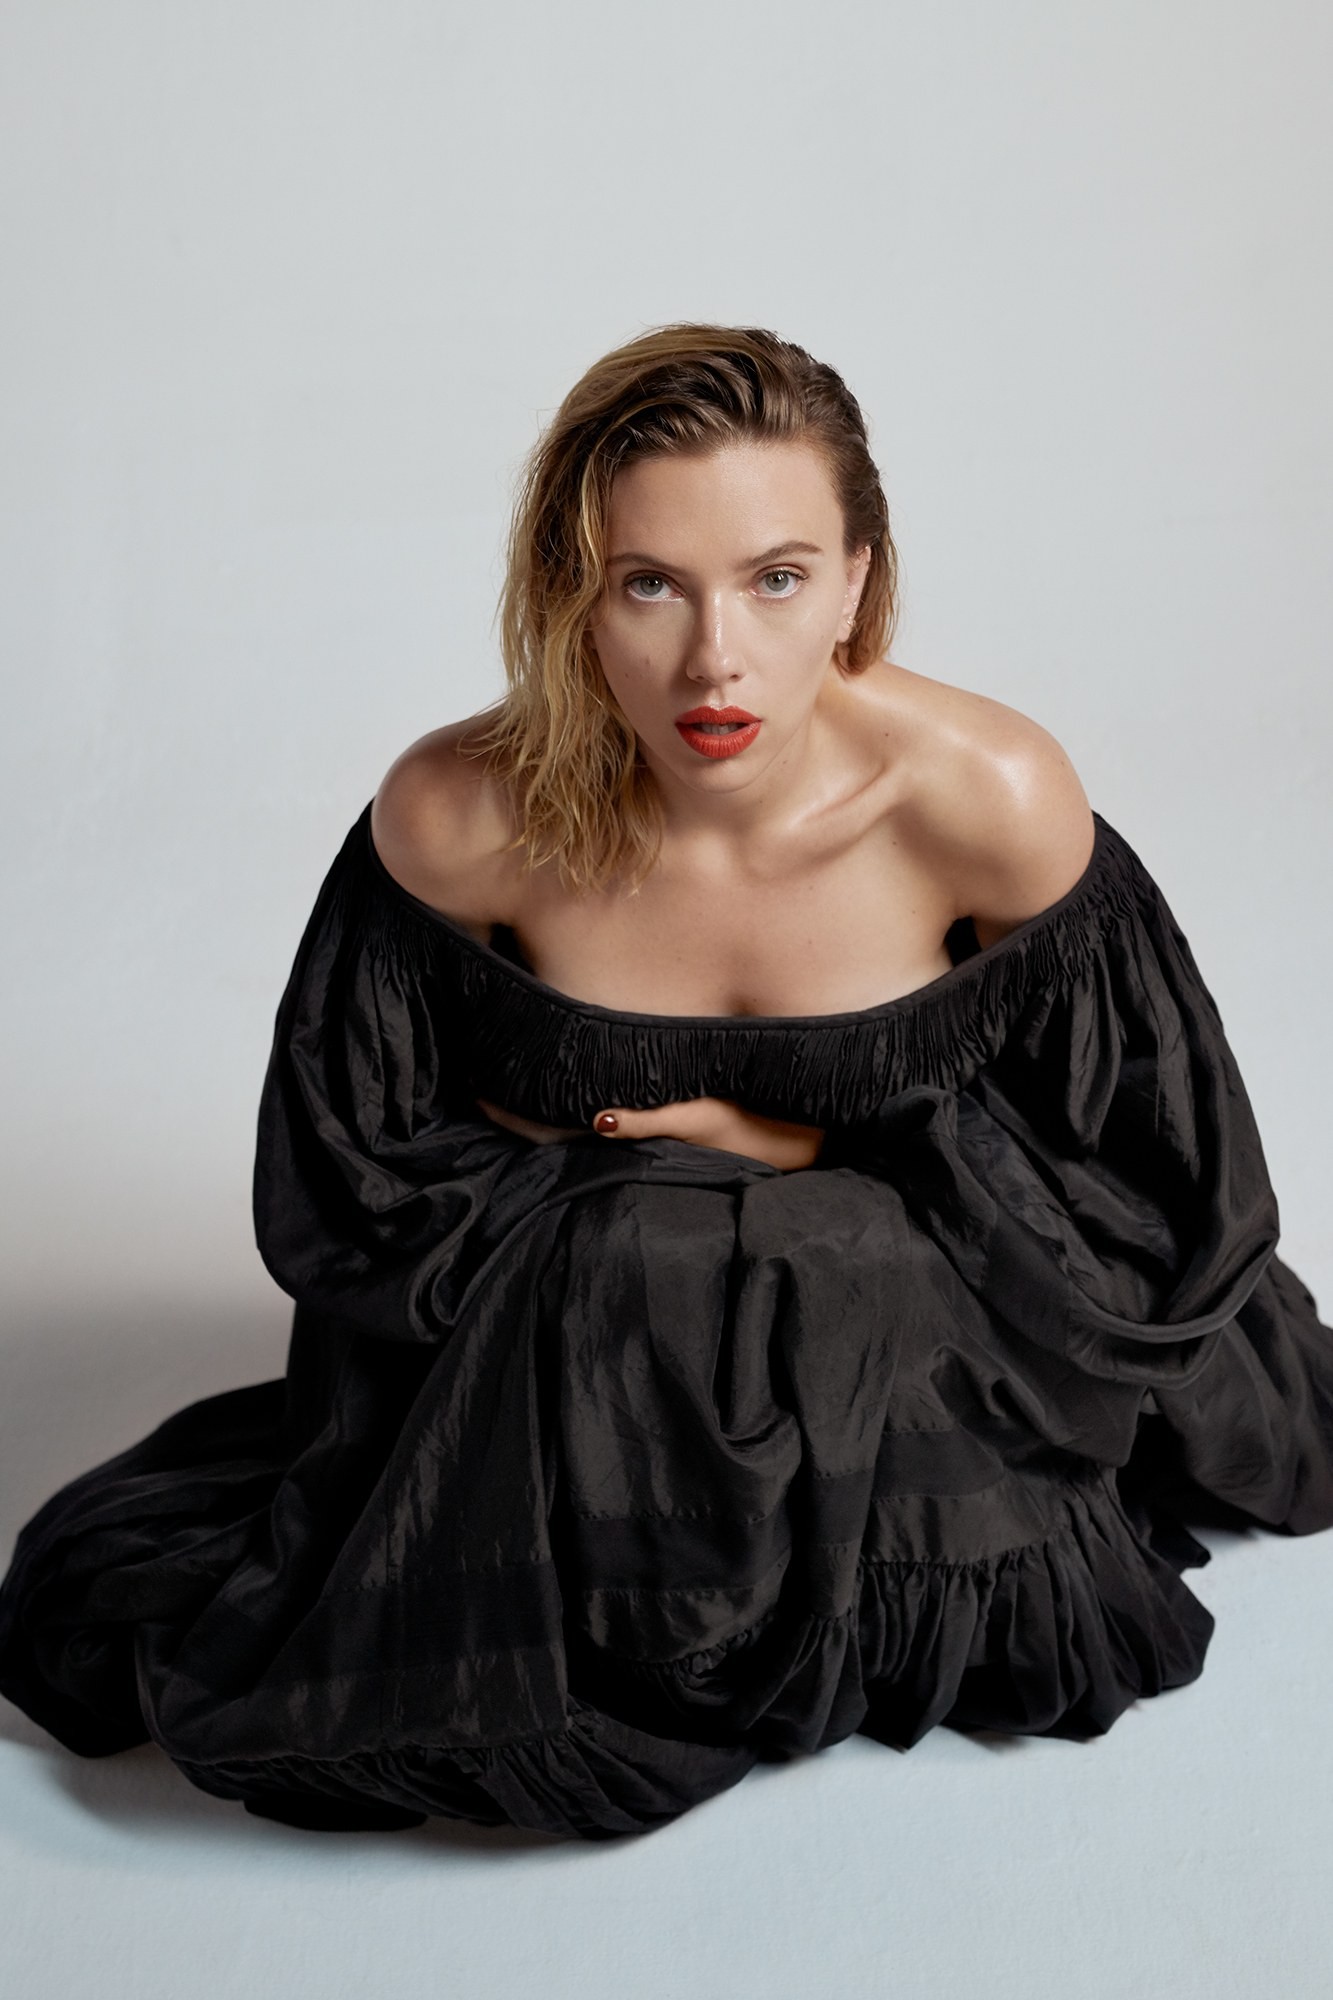 Scarlett Johansson Sexy for Vanity Fair TheFappening.Pro 2 - Scarlett Johansson Sexy (7 Photos)